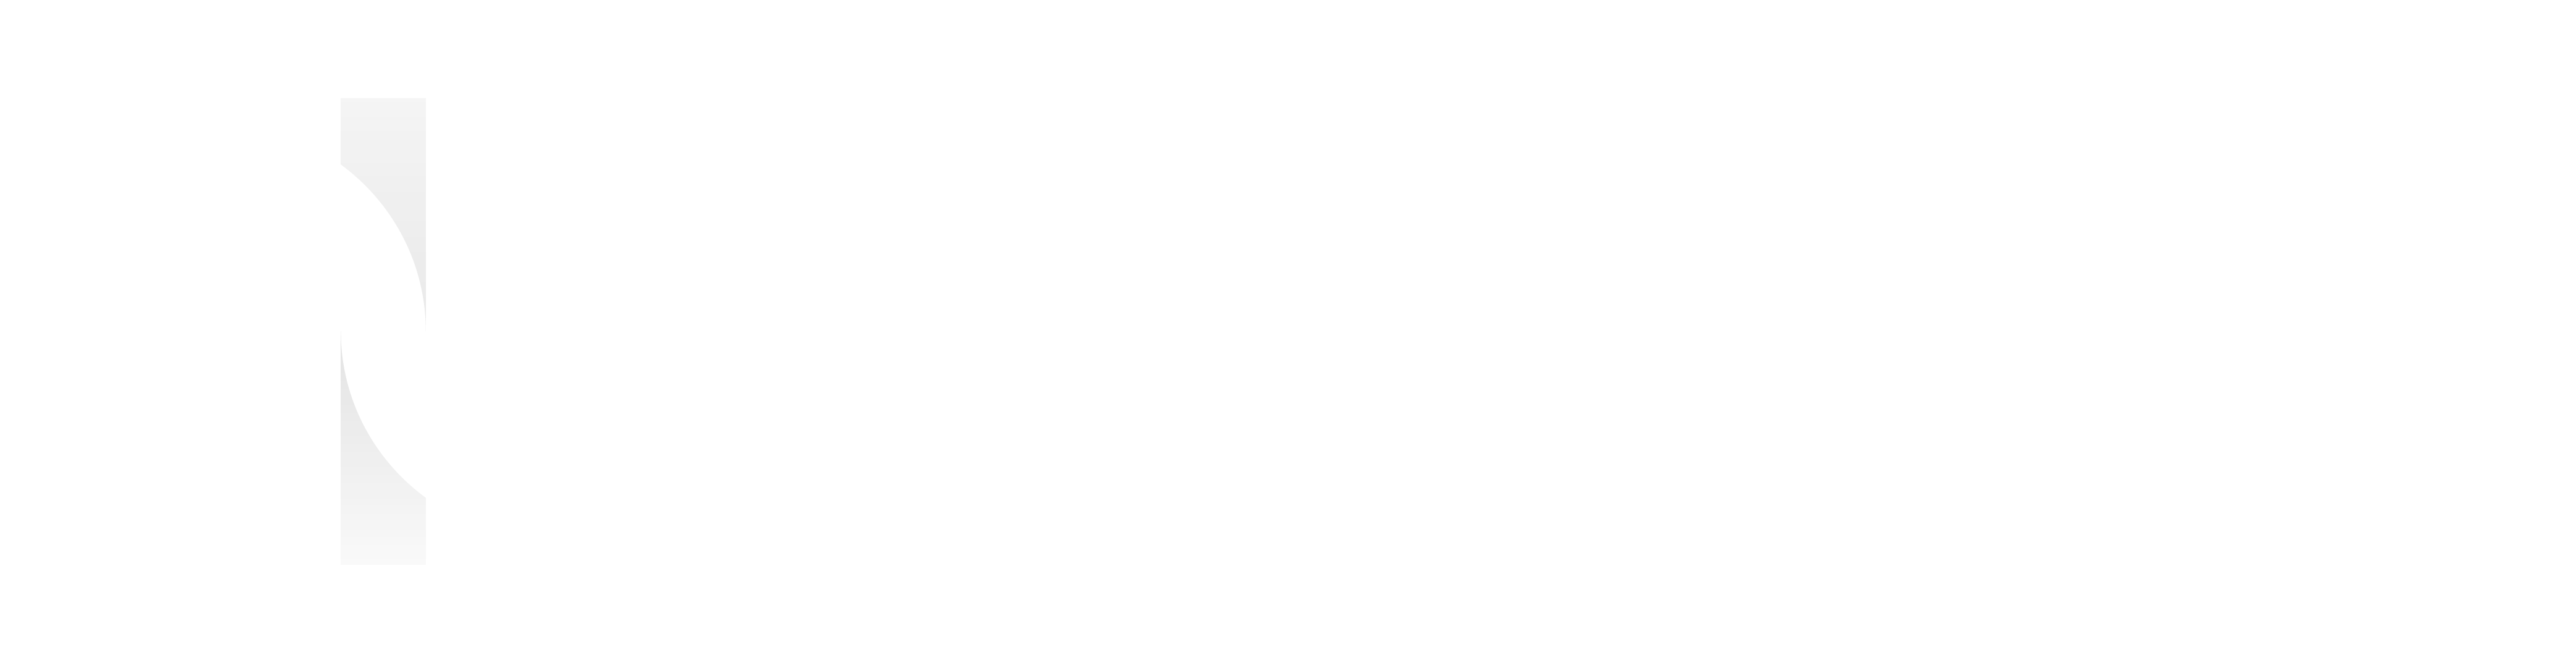 Raynex Medical Systems Ltd